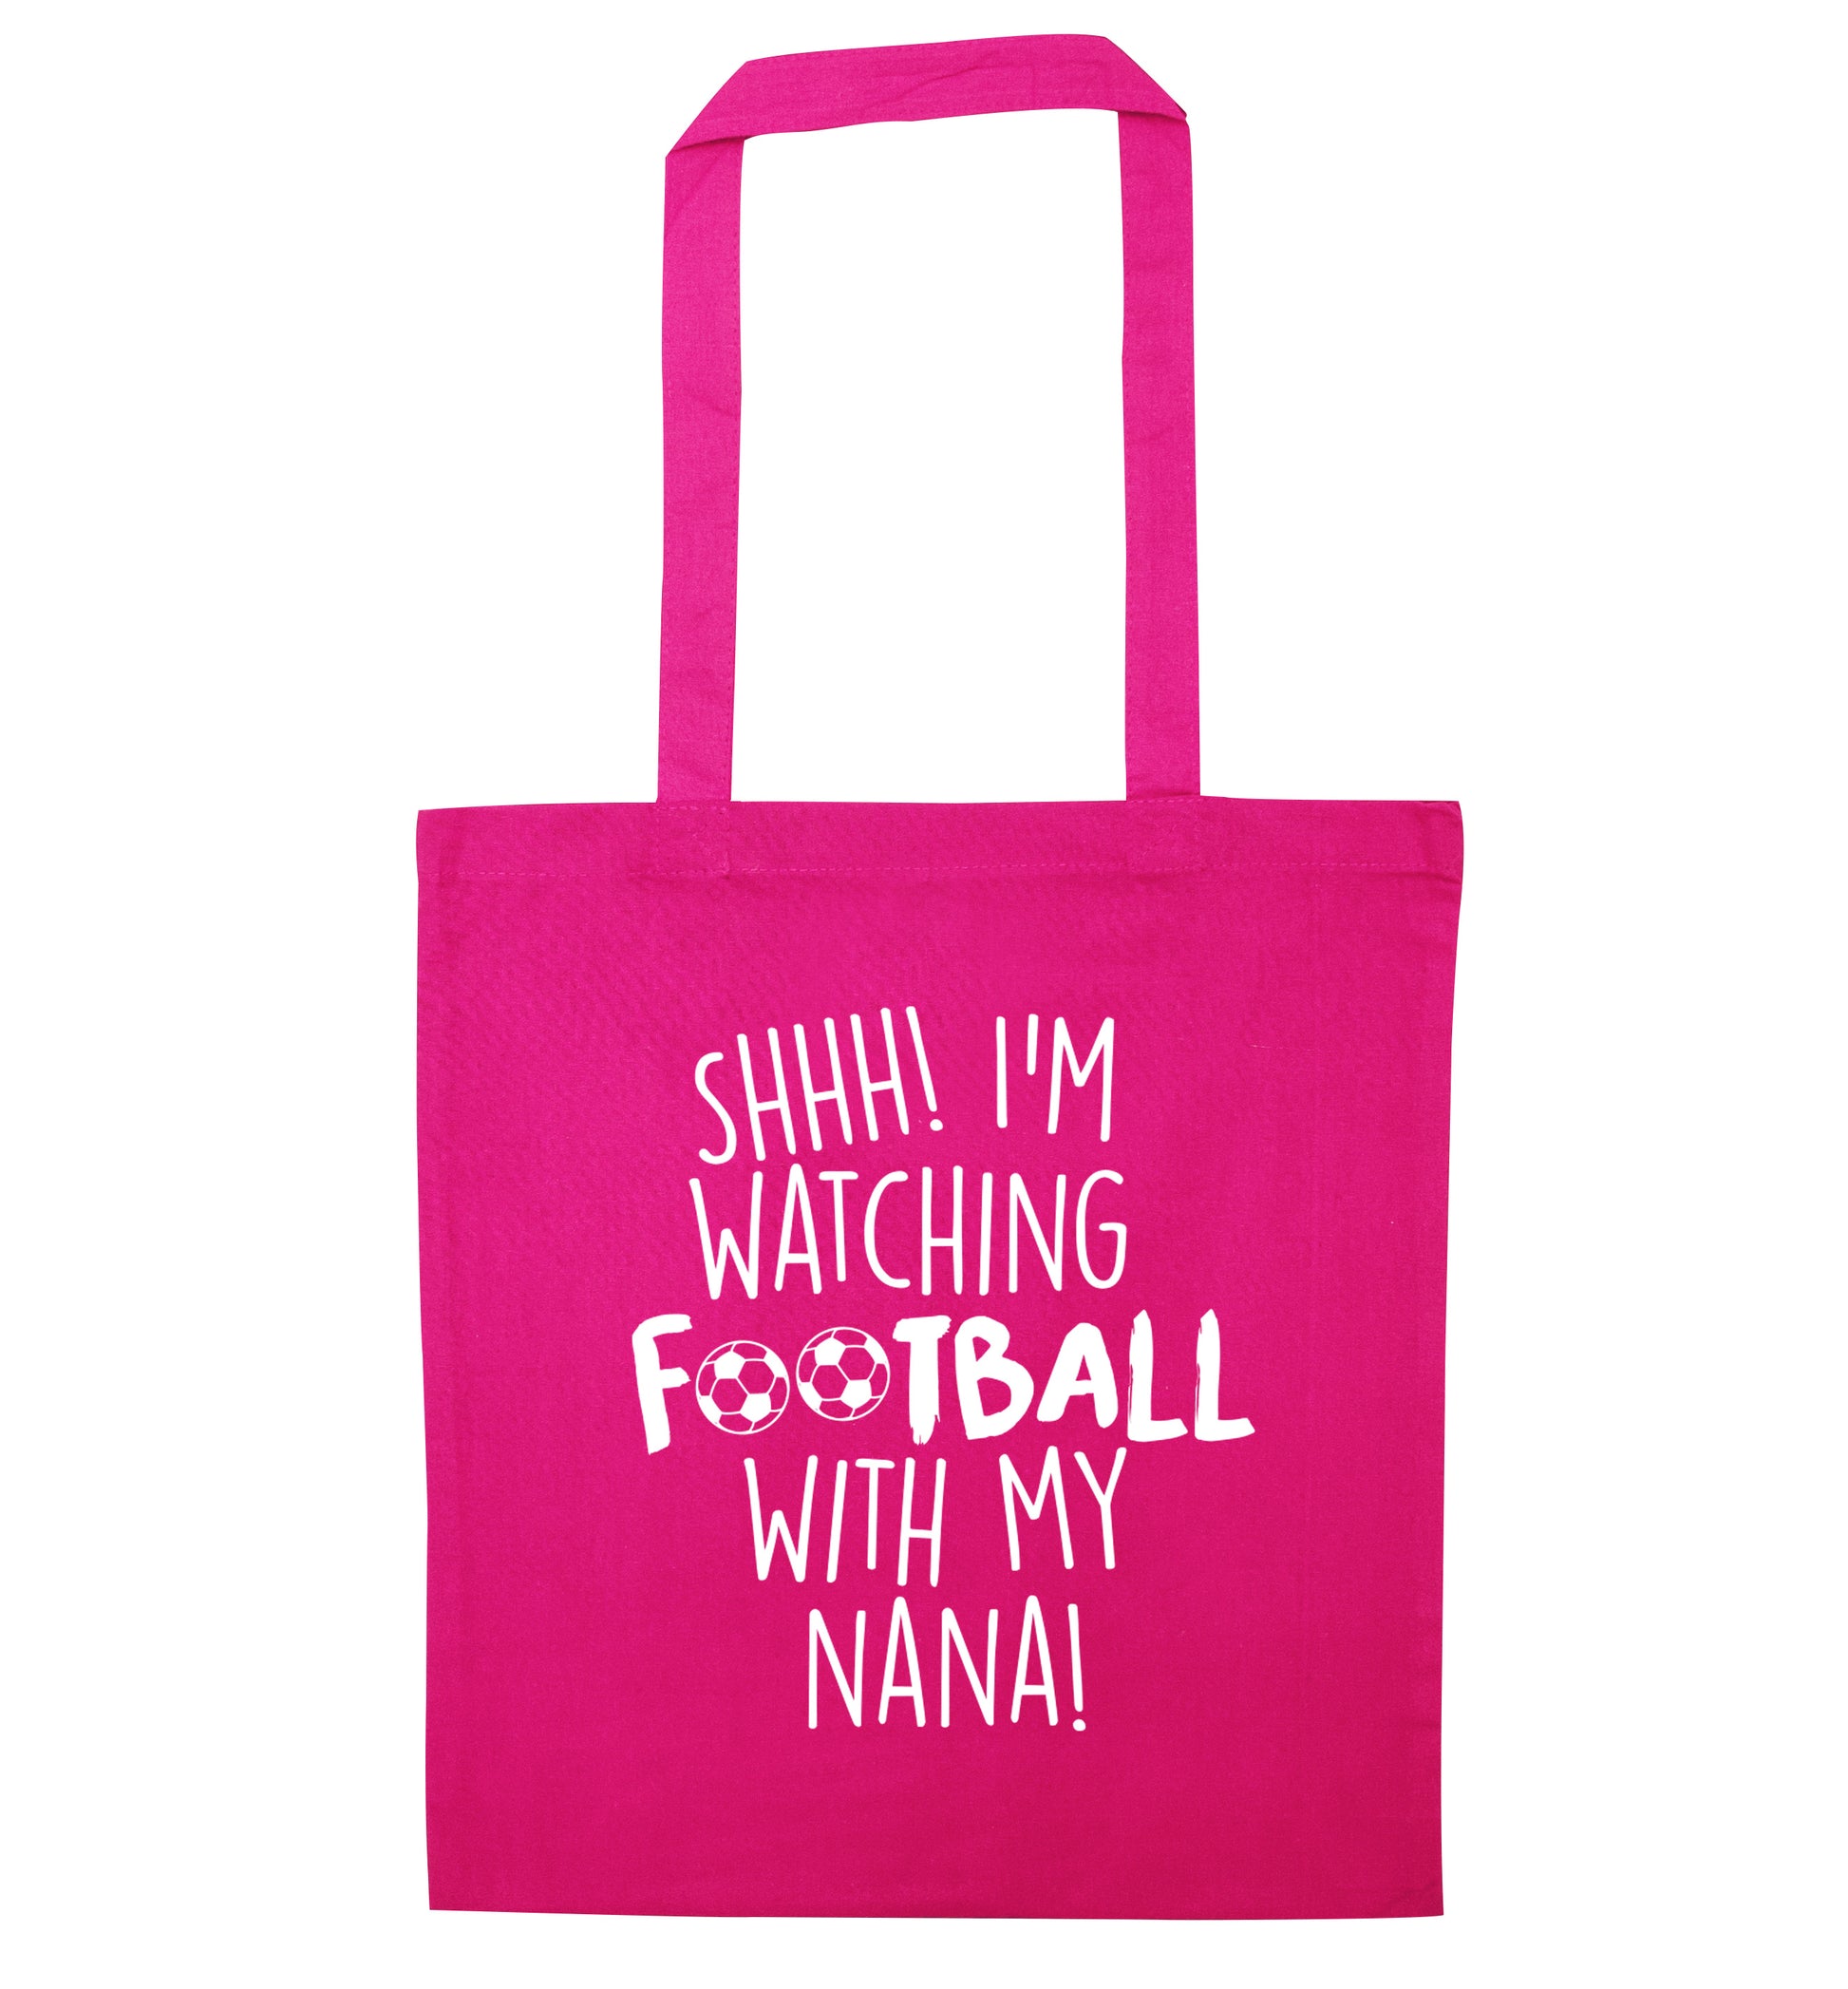 Shhh I'm watching football with my nana pink tote bag